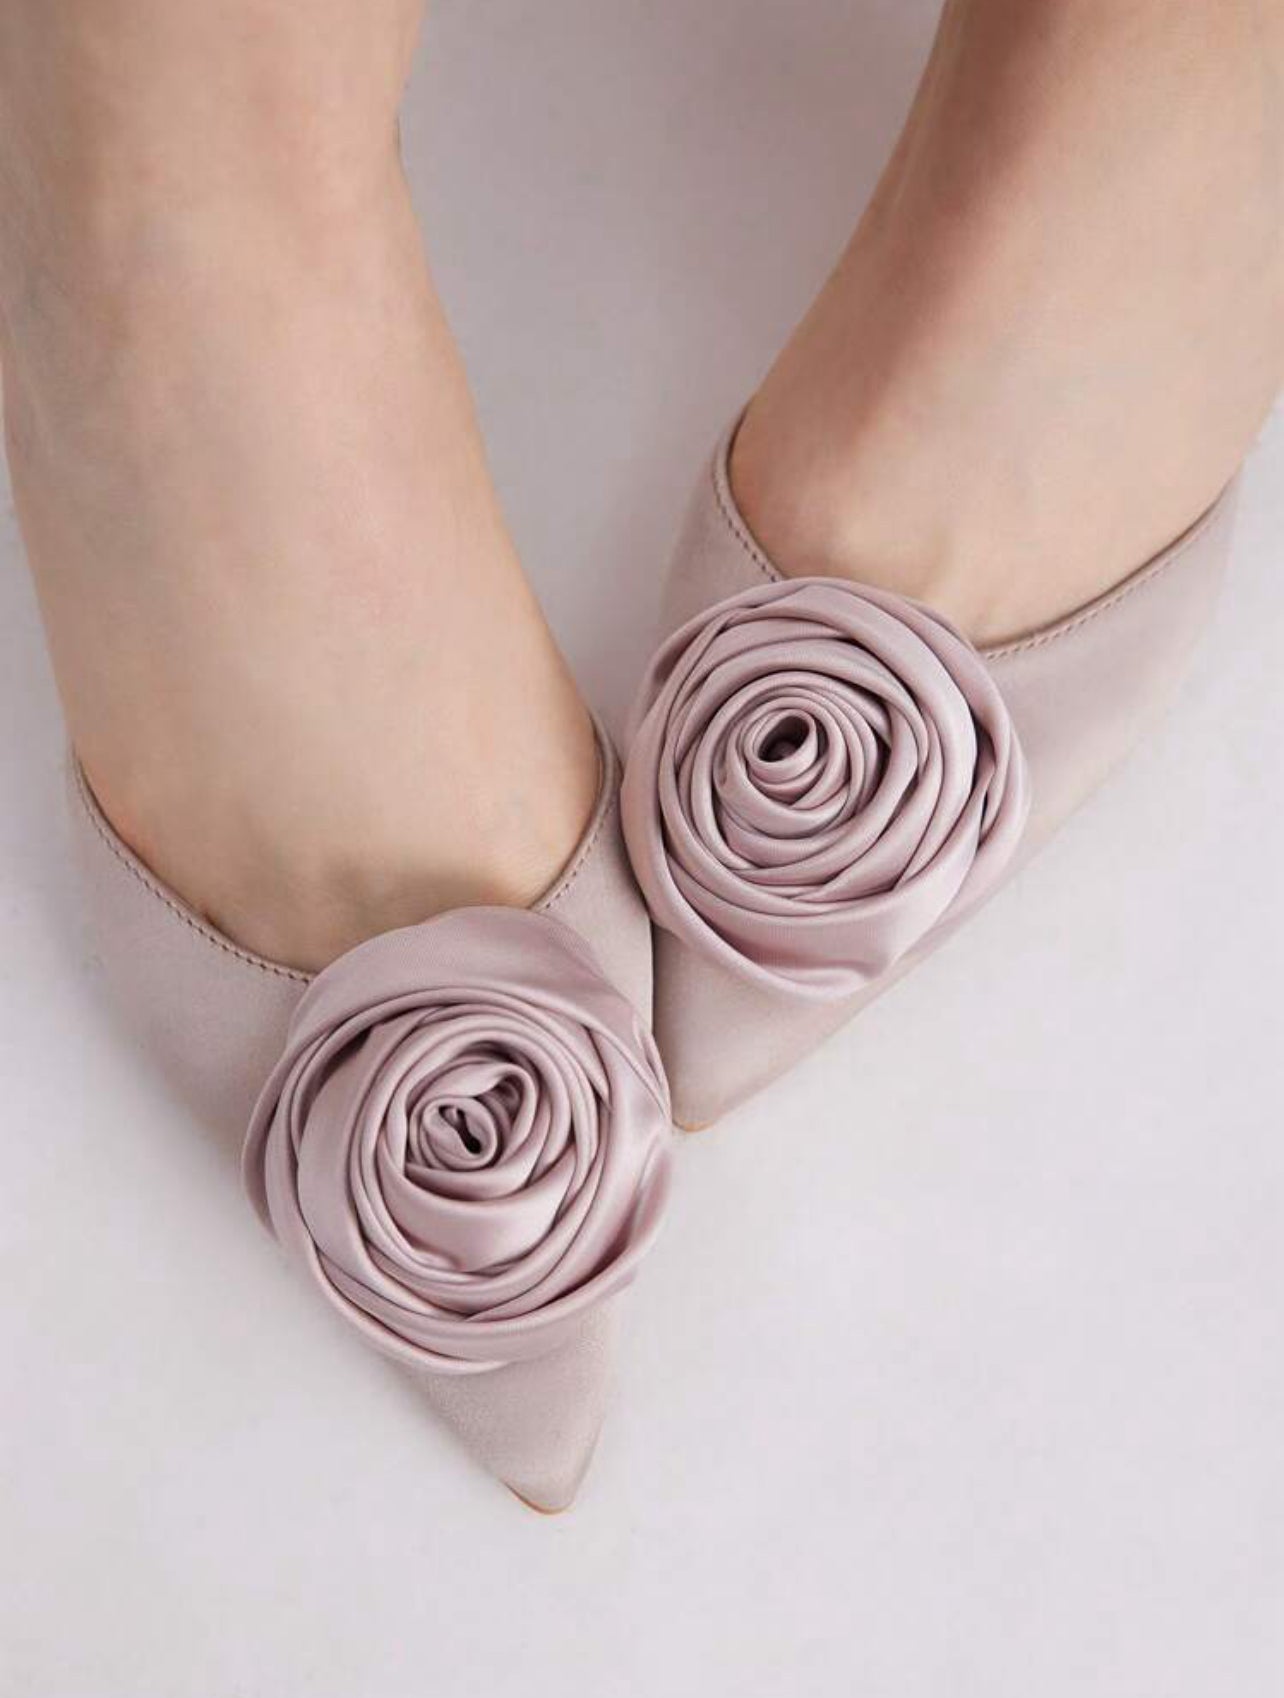 Floral Pointed Toe Premium High Heels